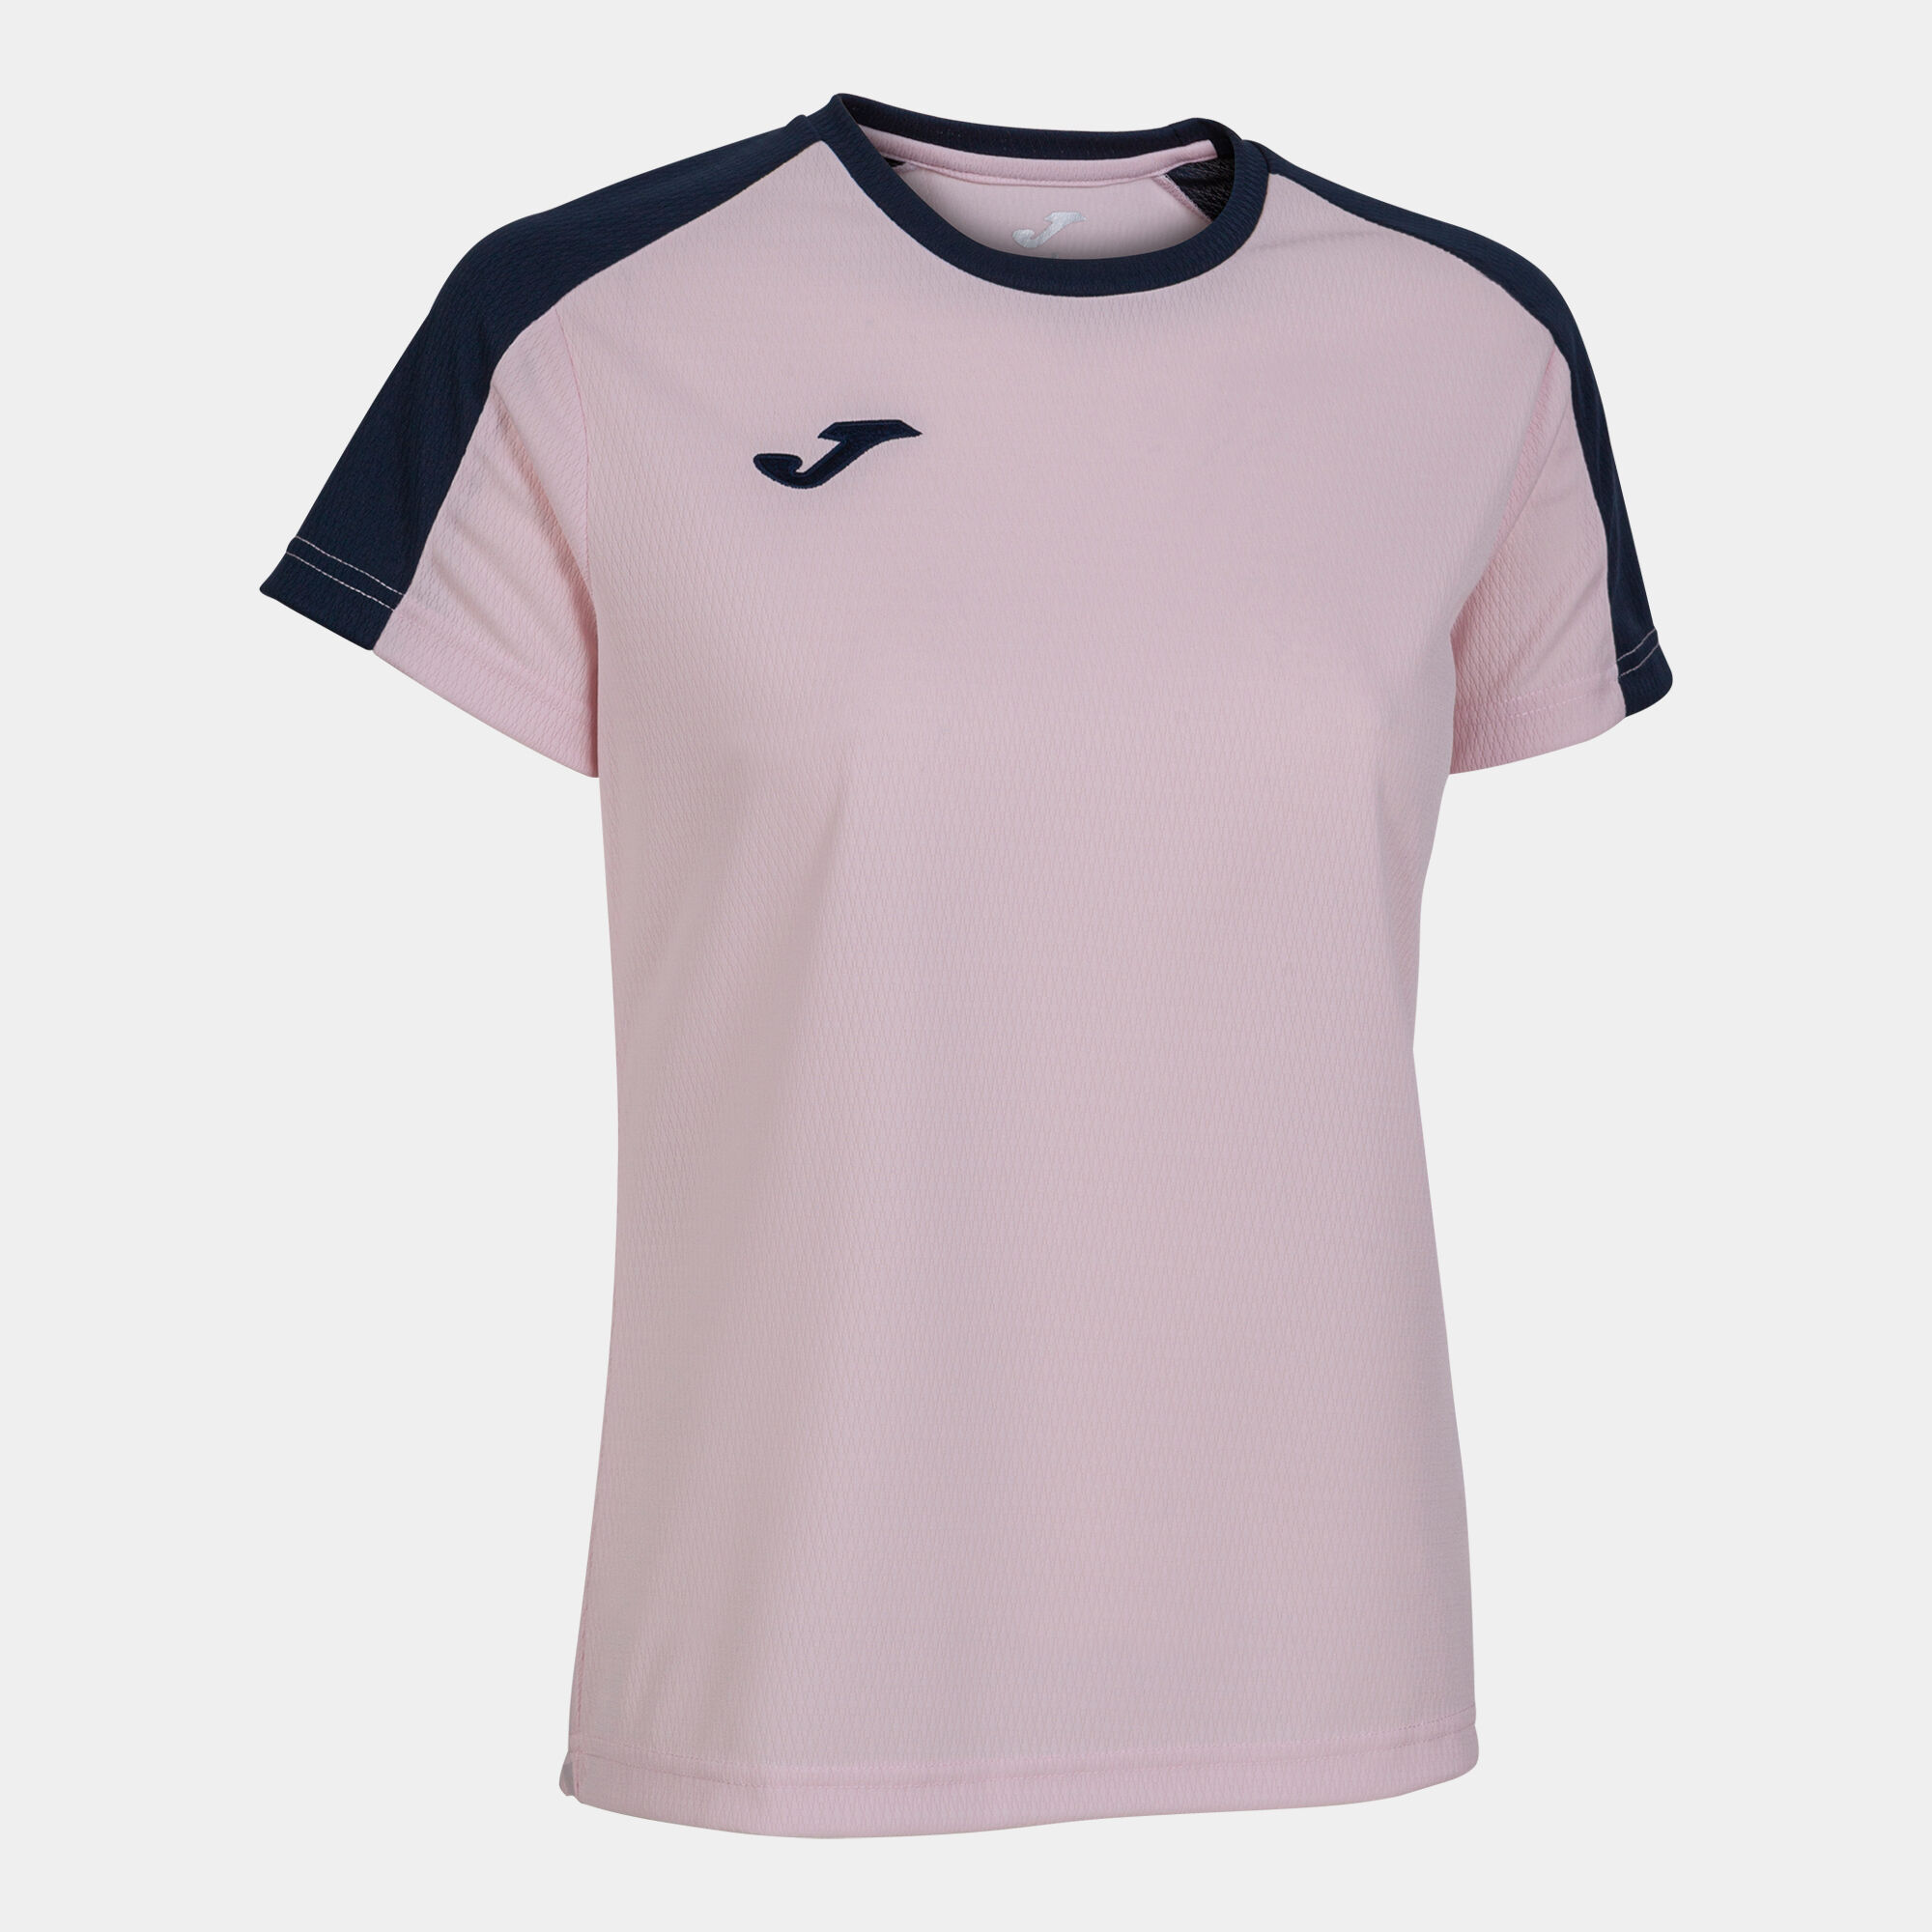 Shirt short sleeve woman Eco Championship pink navy blue